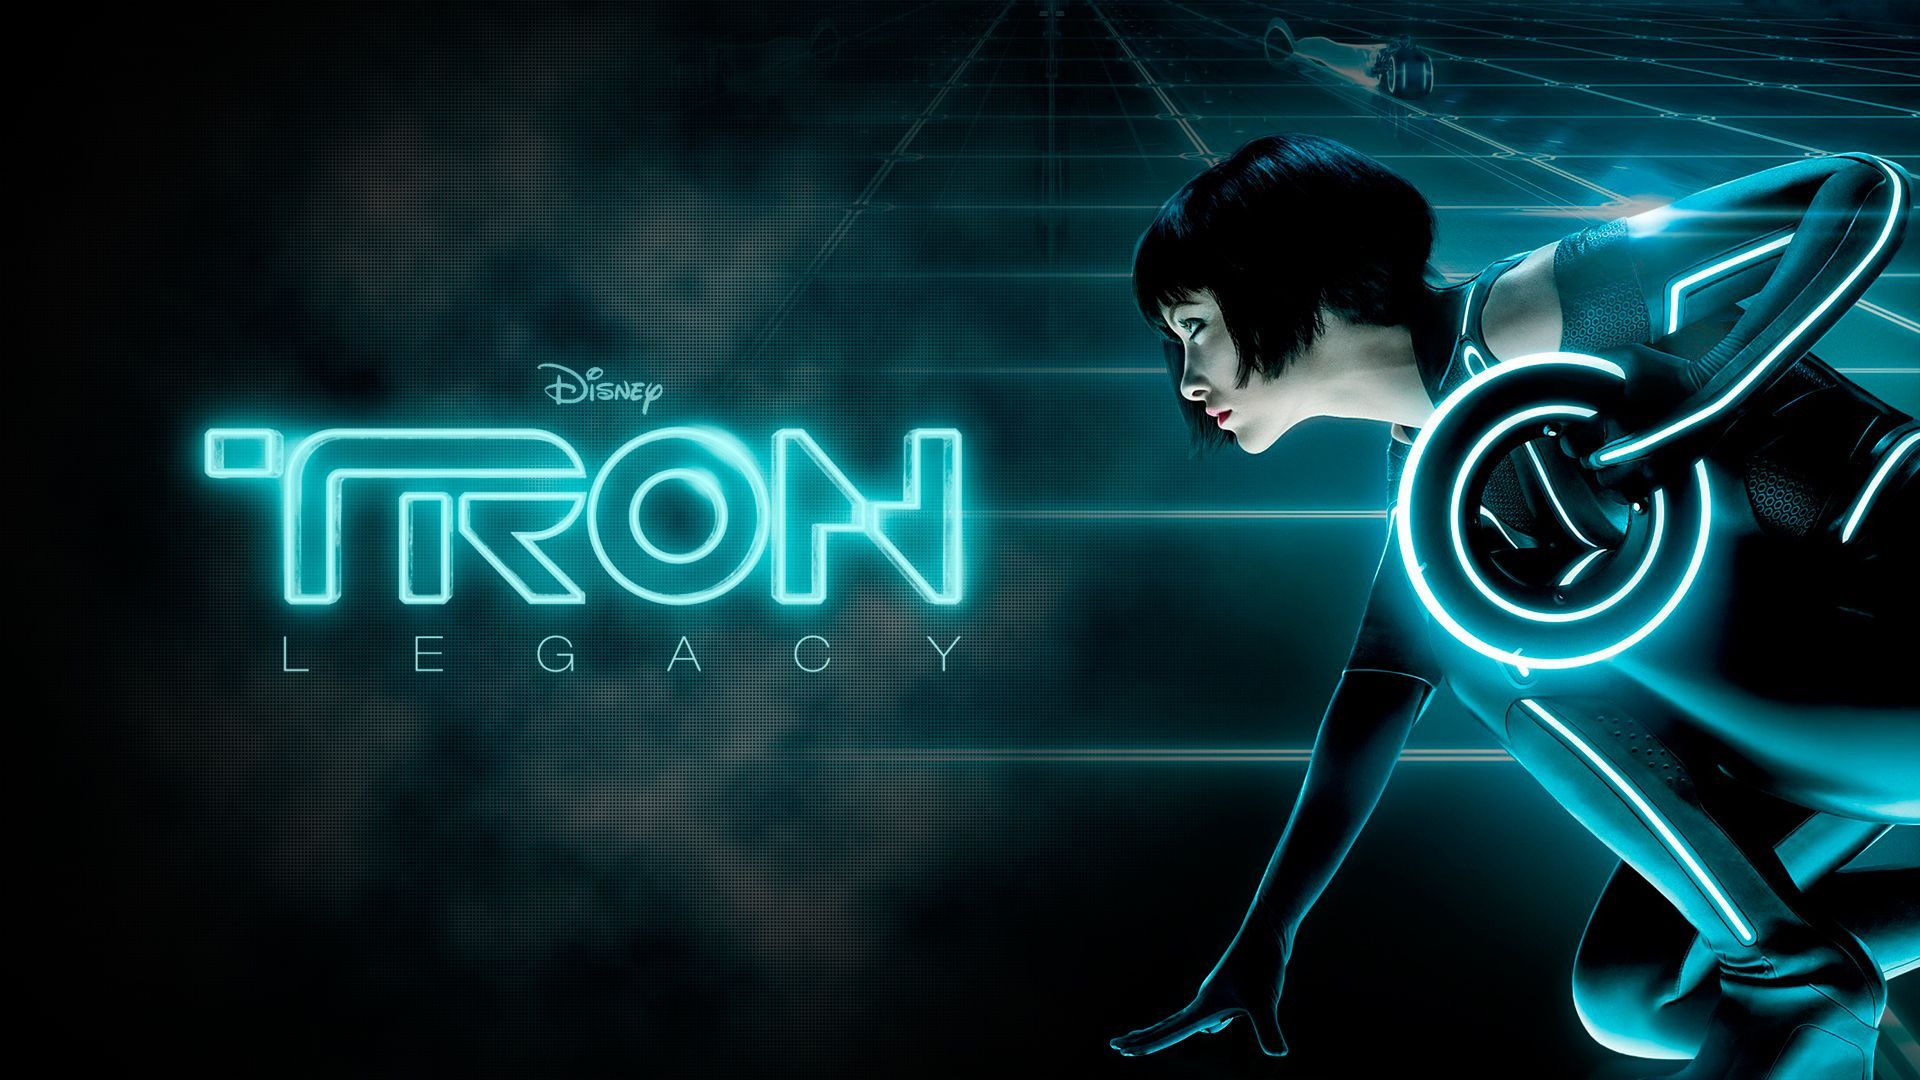 Tron Legacy Wallpaper: Tron: Legacy. Tron legacy, Tron, Olivia wilde tron